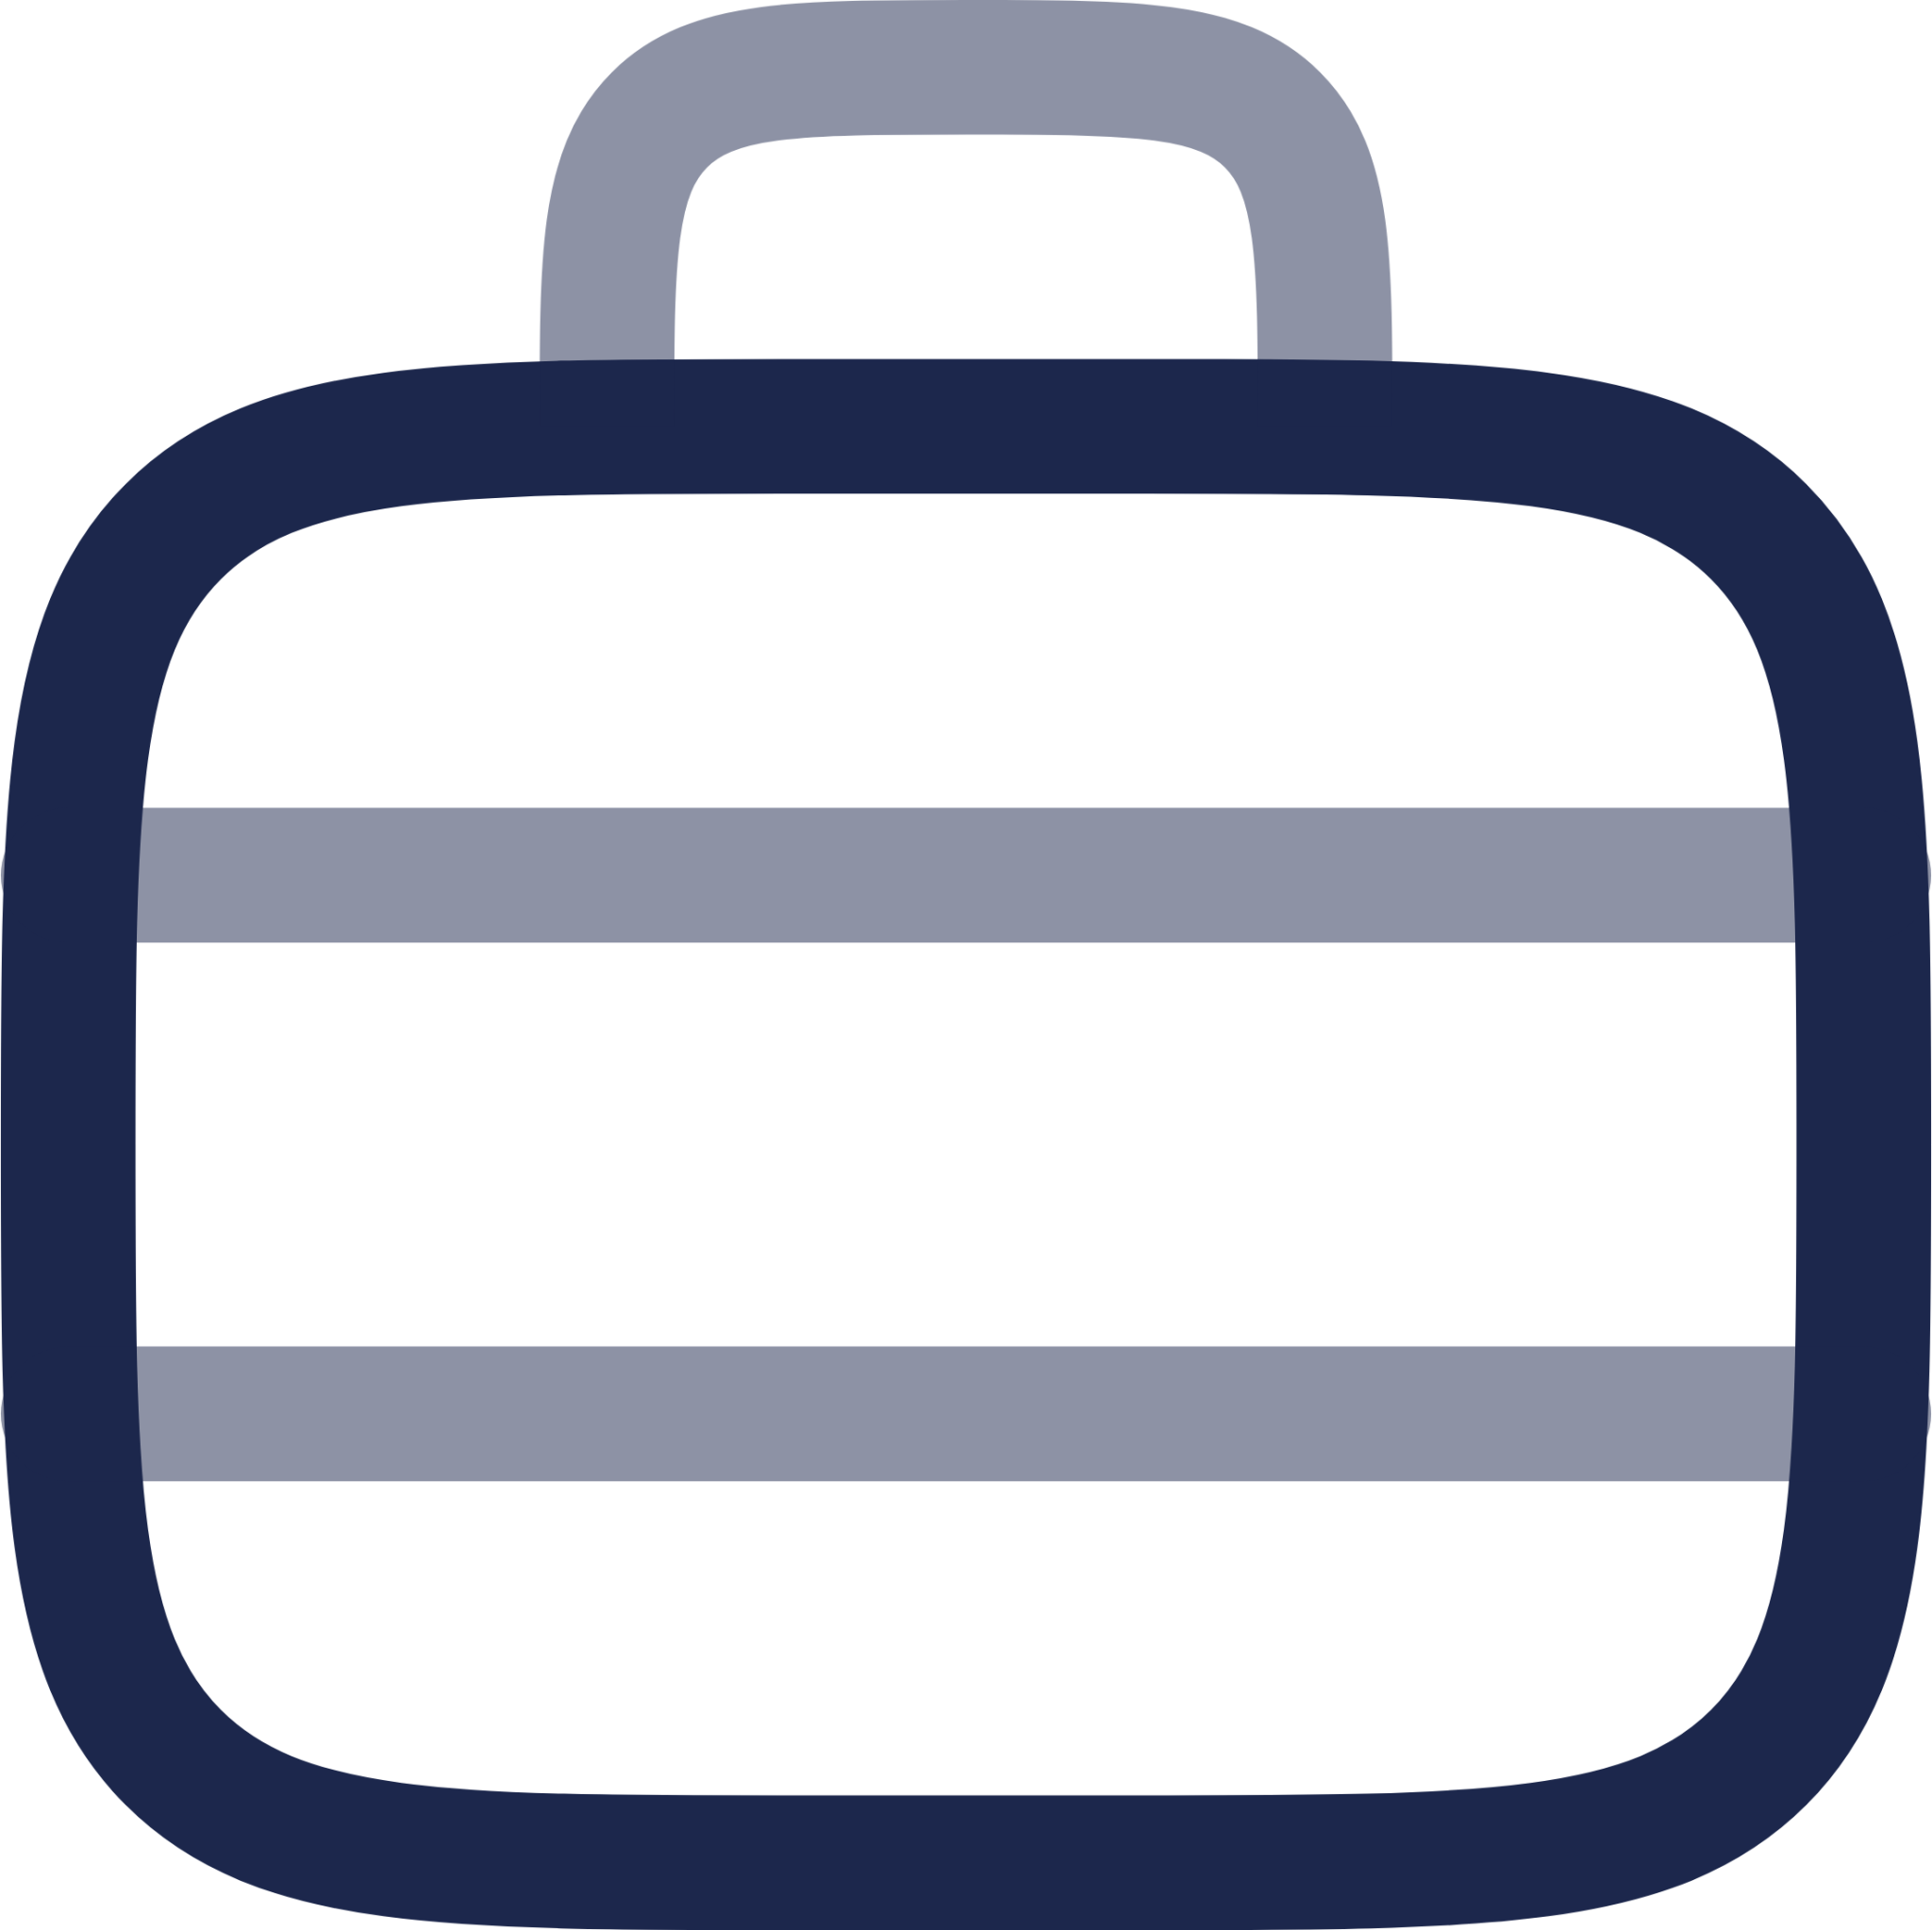 Suitcase Lines icon